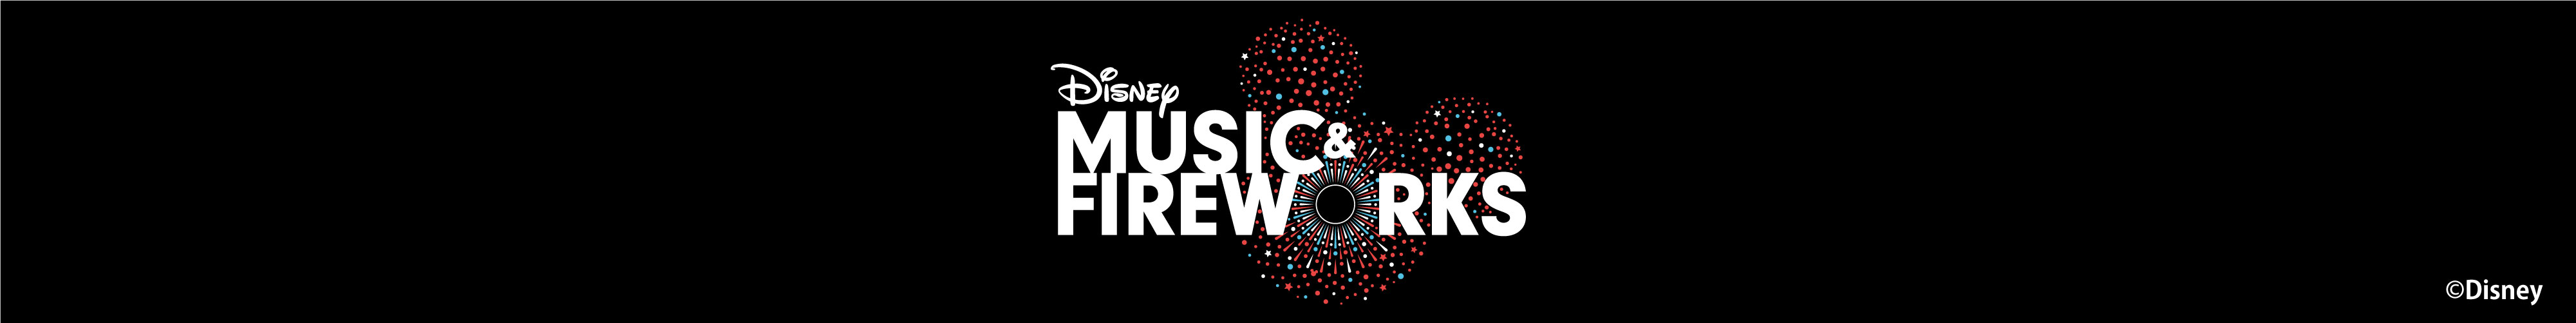 Disney Music  Fireworks ミニタオル【グッズ】 ディズニー ミュージック  ファイヤーワークス UNIVERSAL  MUSIC STORE